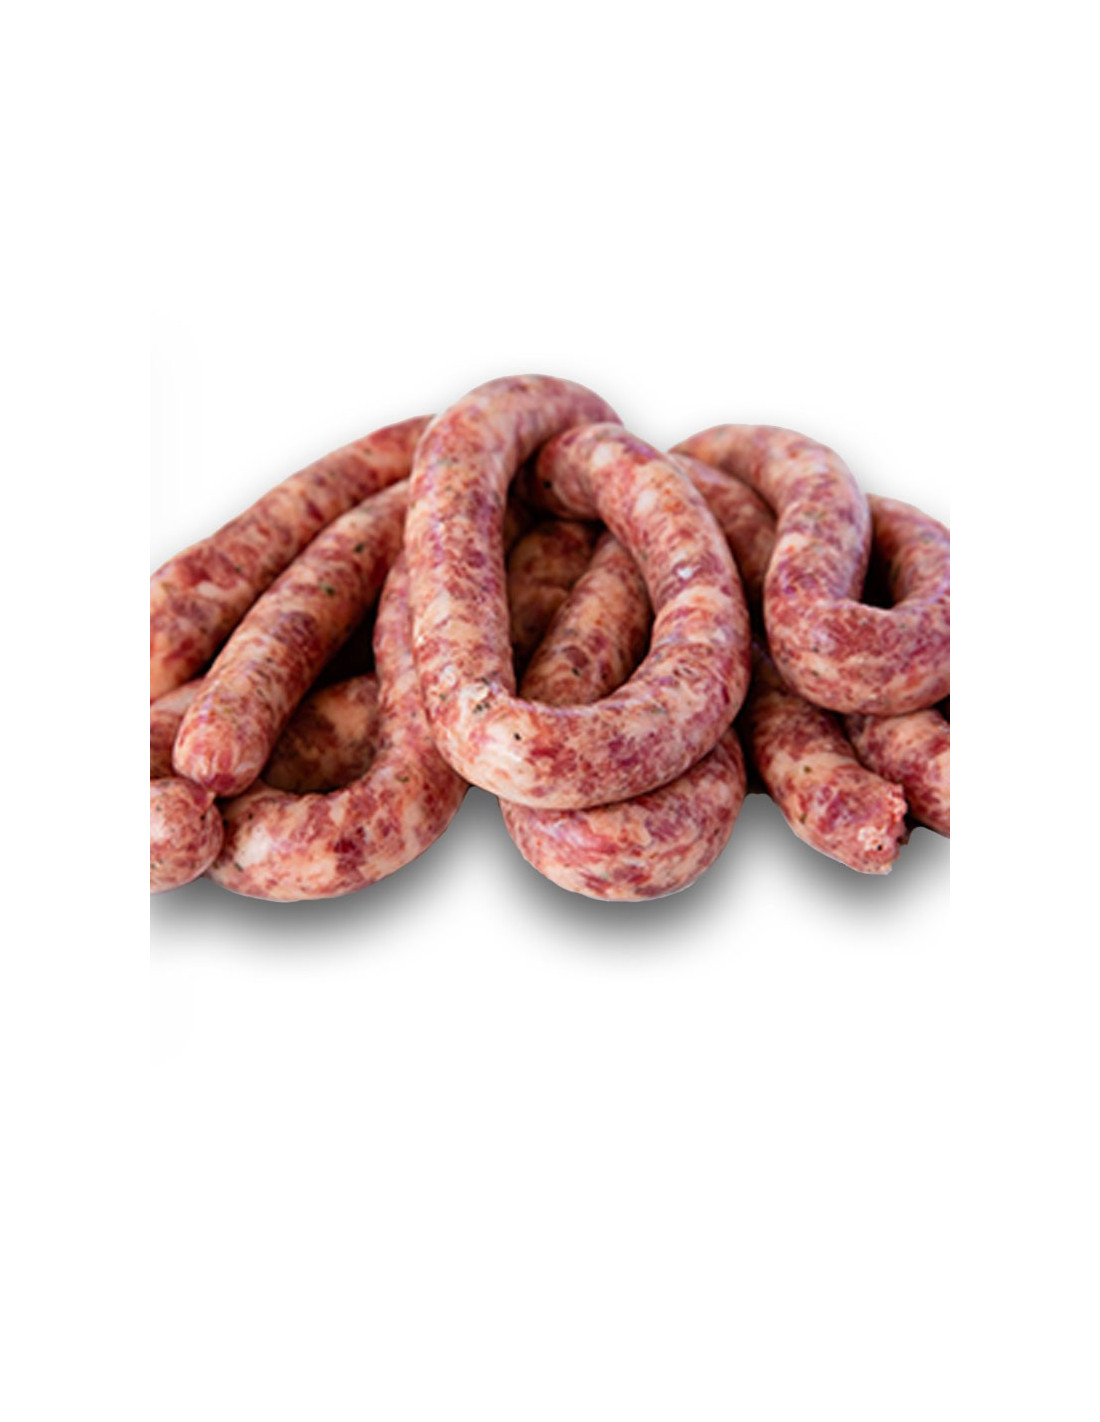 Sausage, Parrillera Buy 1.5kg - from Salchicha